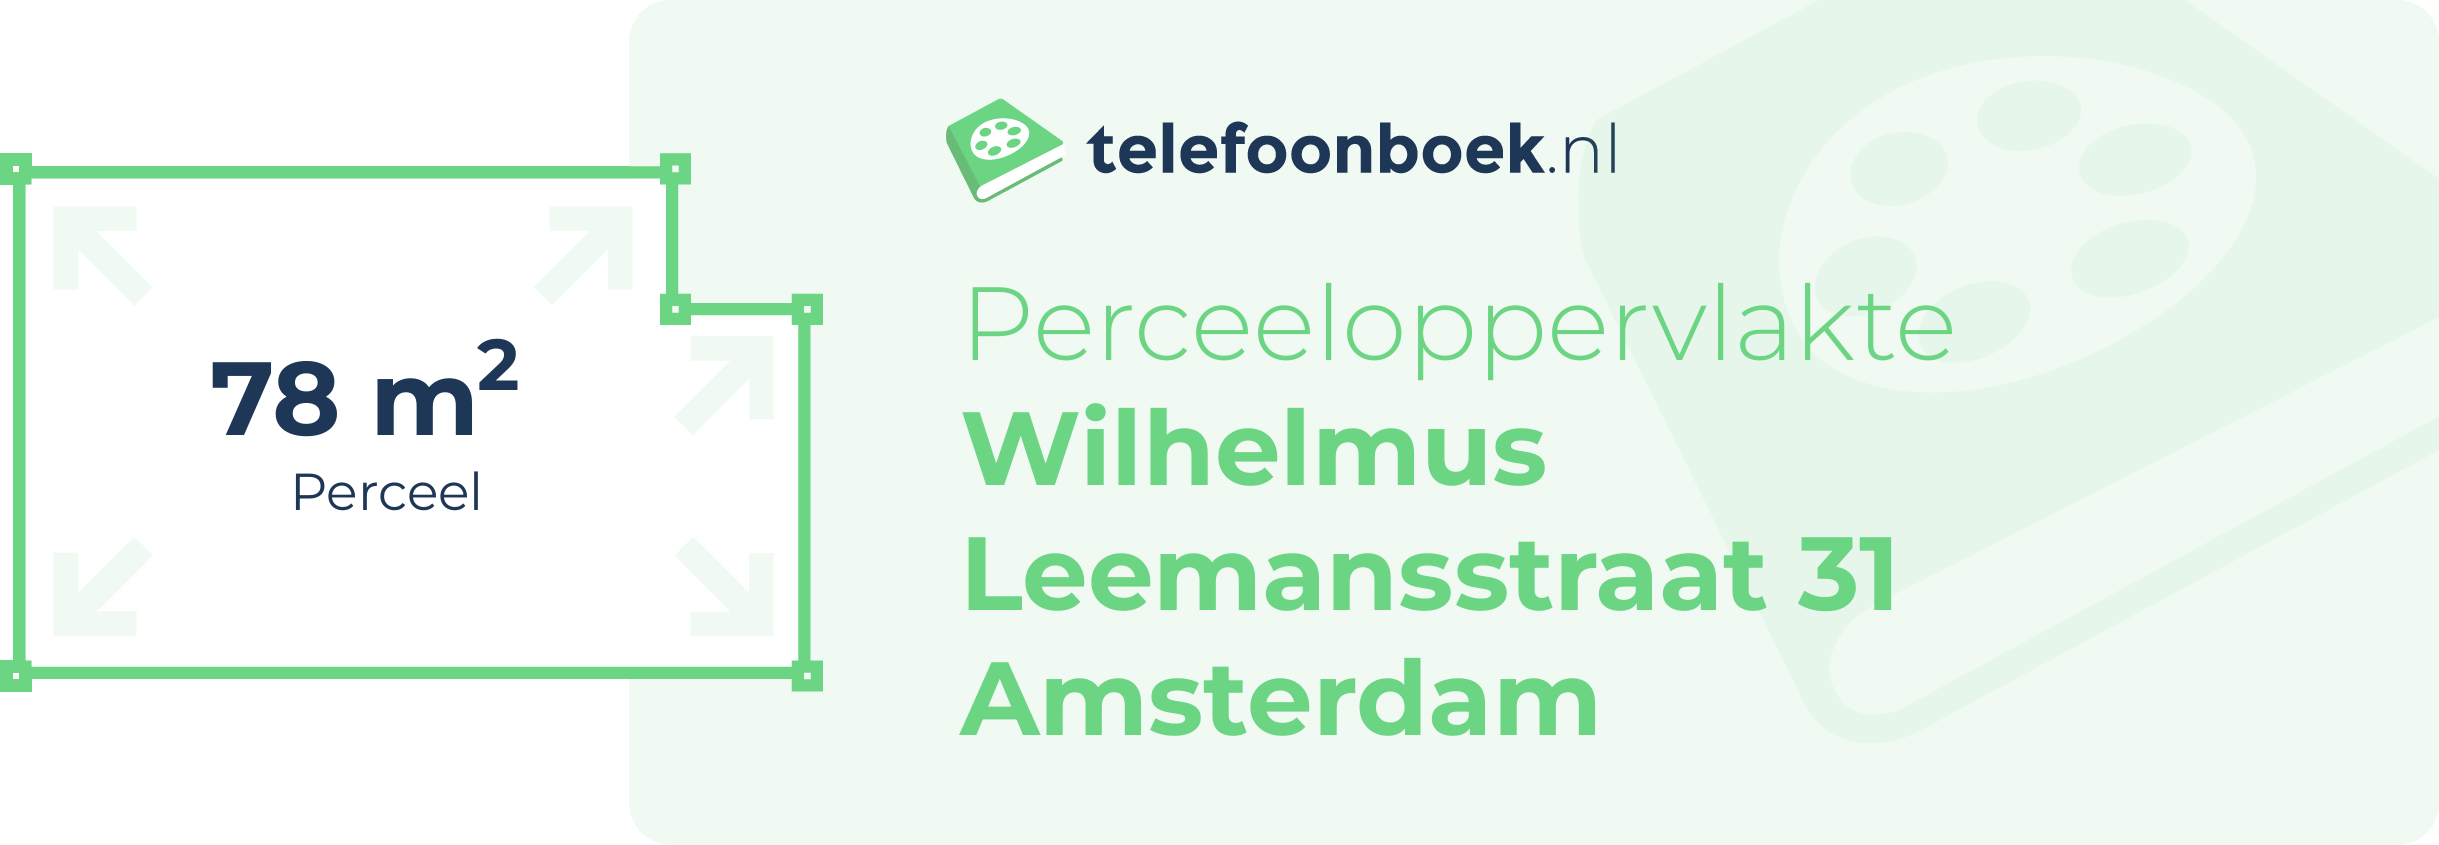 Perceeloppervlakte Wilhelmus Leemansstraat 31 Amsterdam